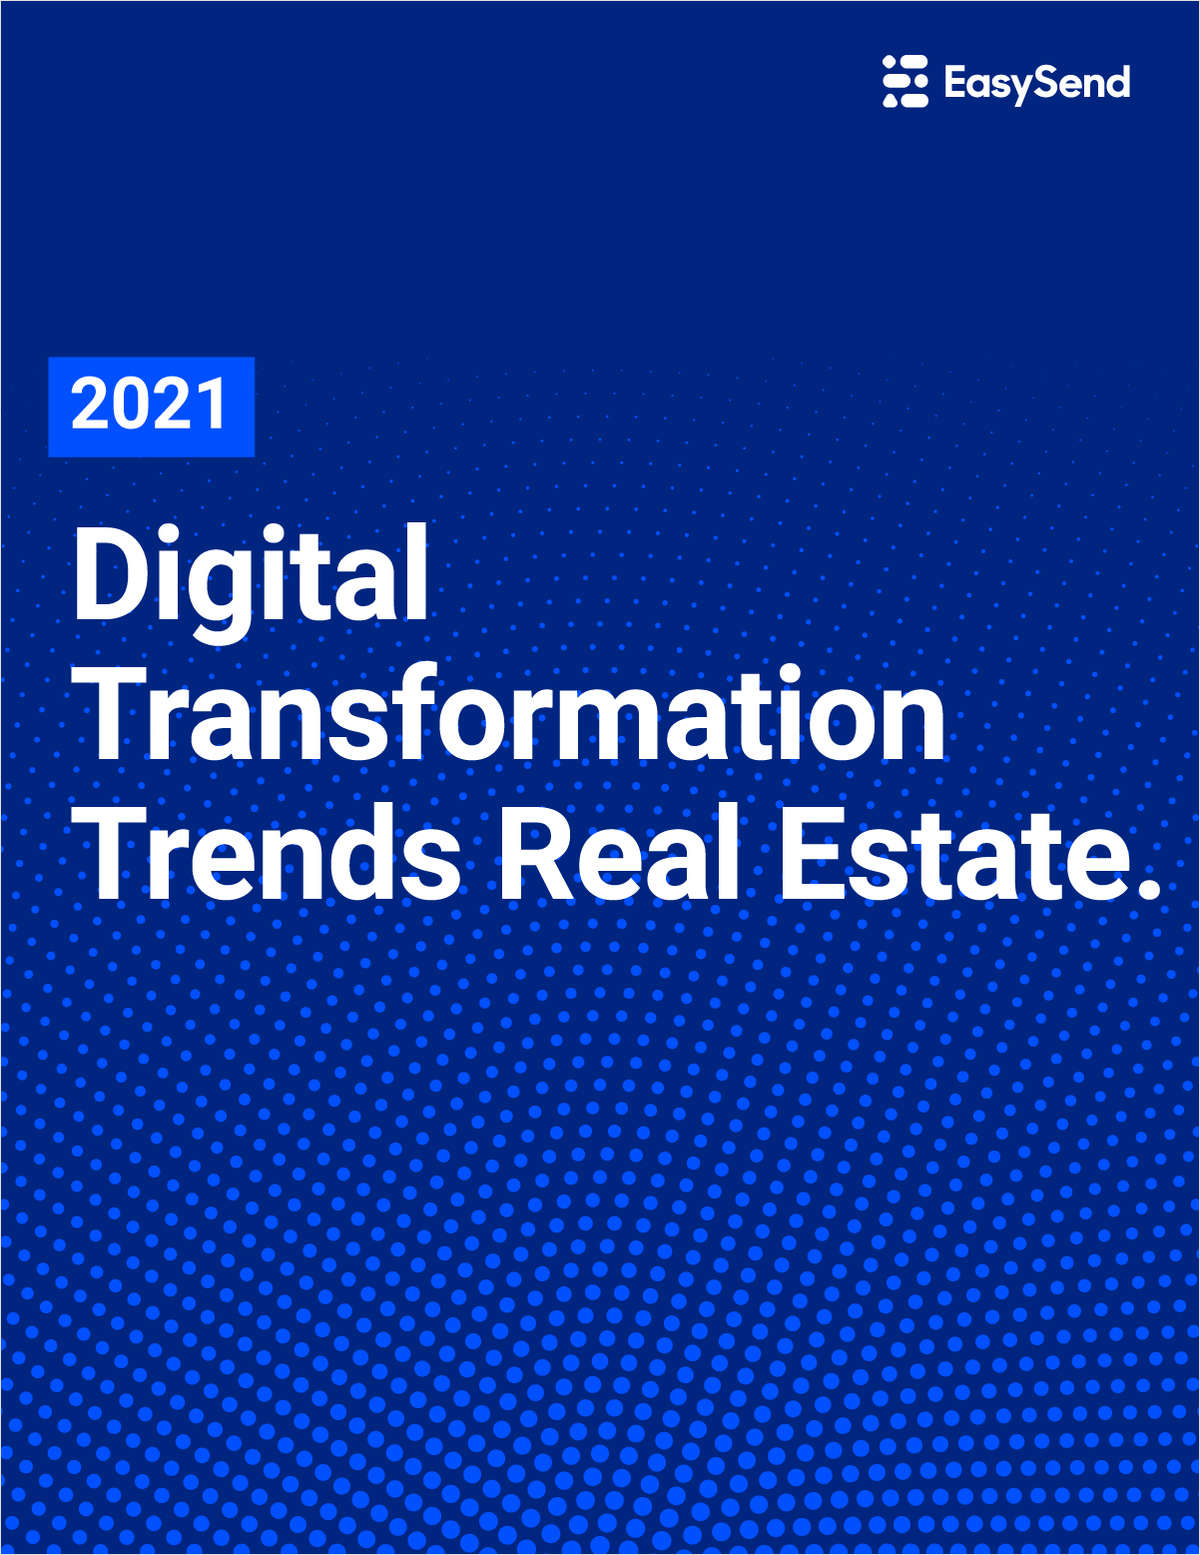 Top 12 Digital Transformation Trends Real Estate 2021.